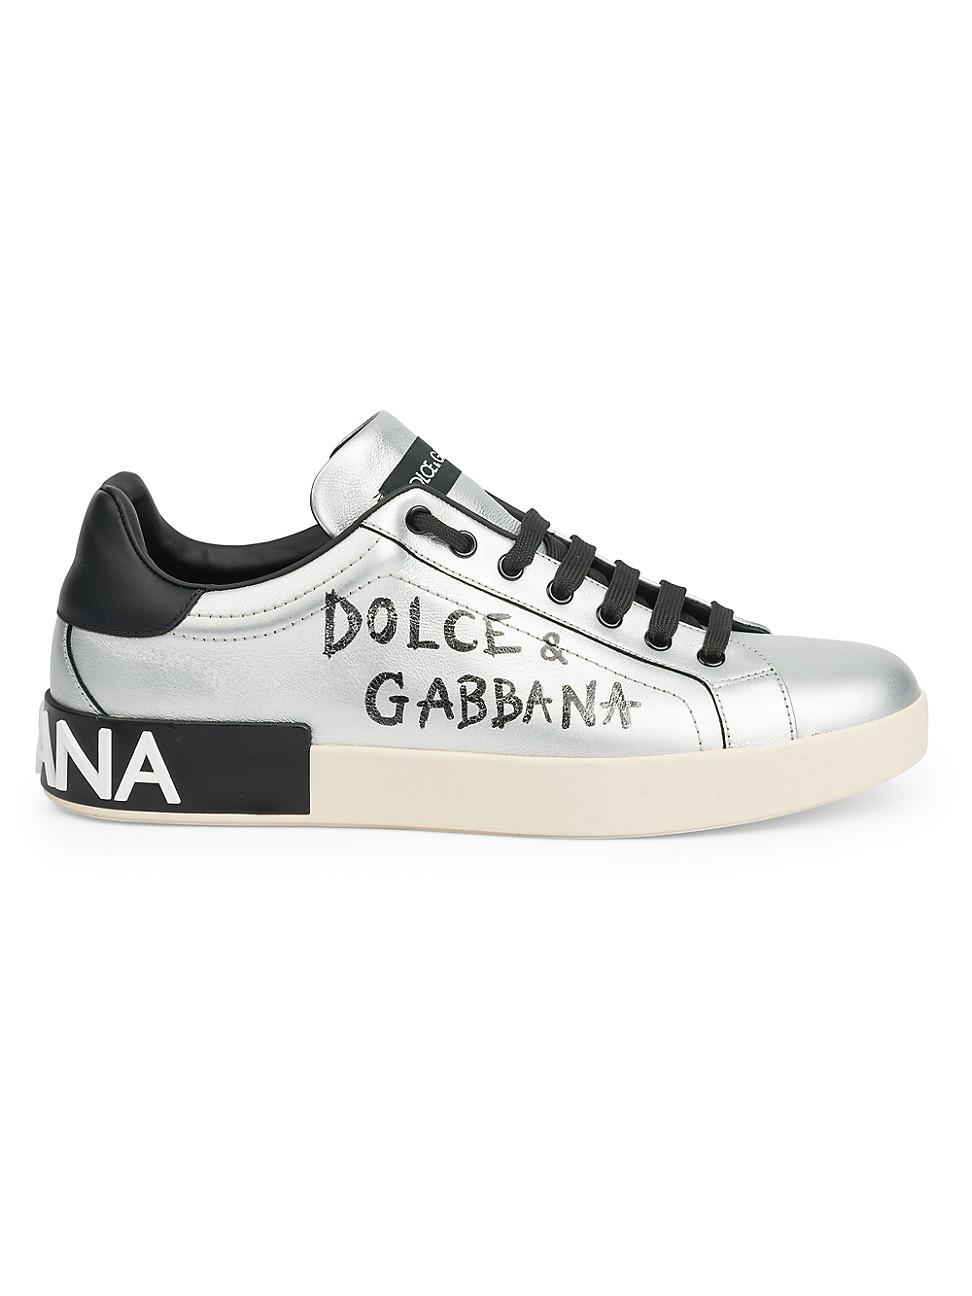 Dolce & Gabbana Metallic Calfskin Nappa Portofino Sneakers for Men | Lyst